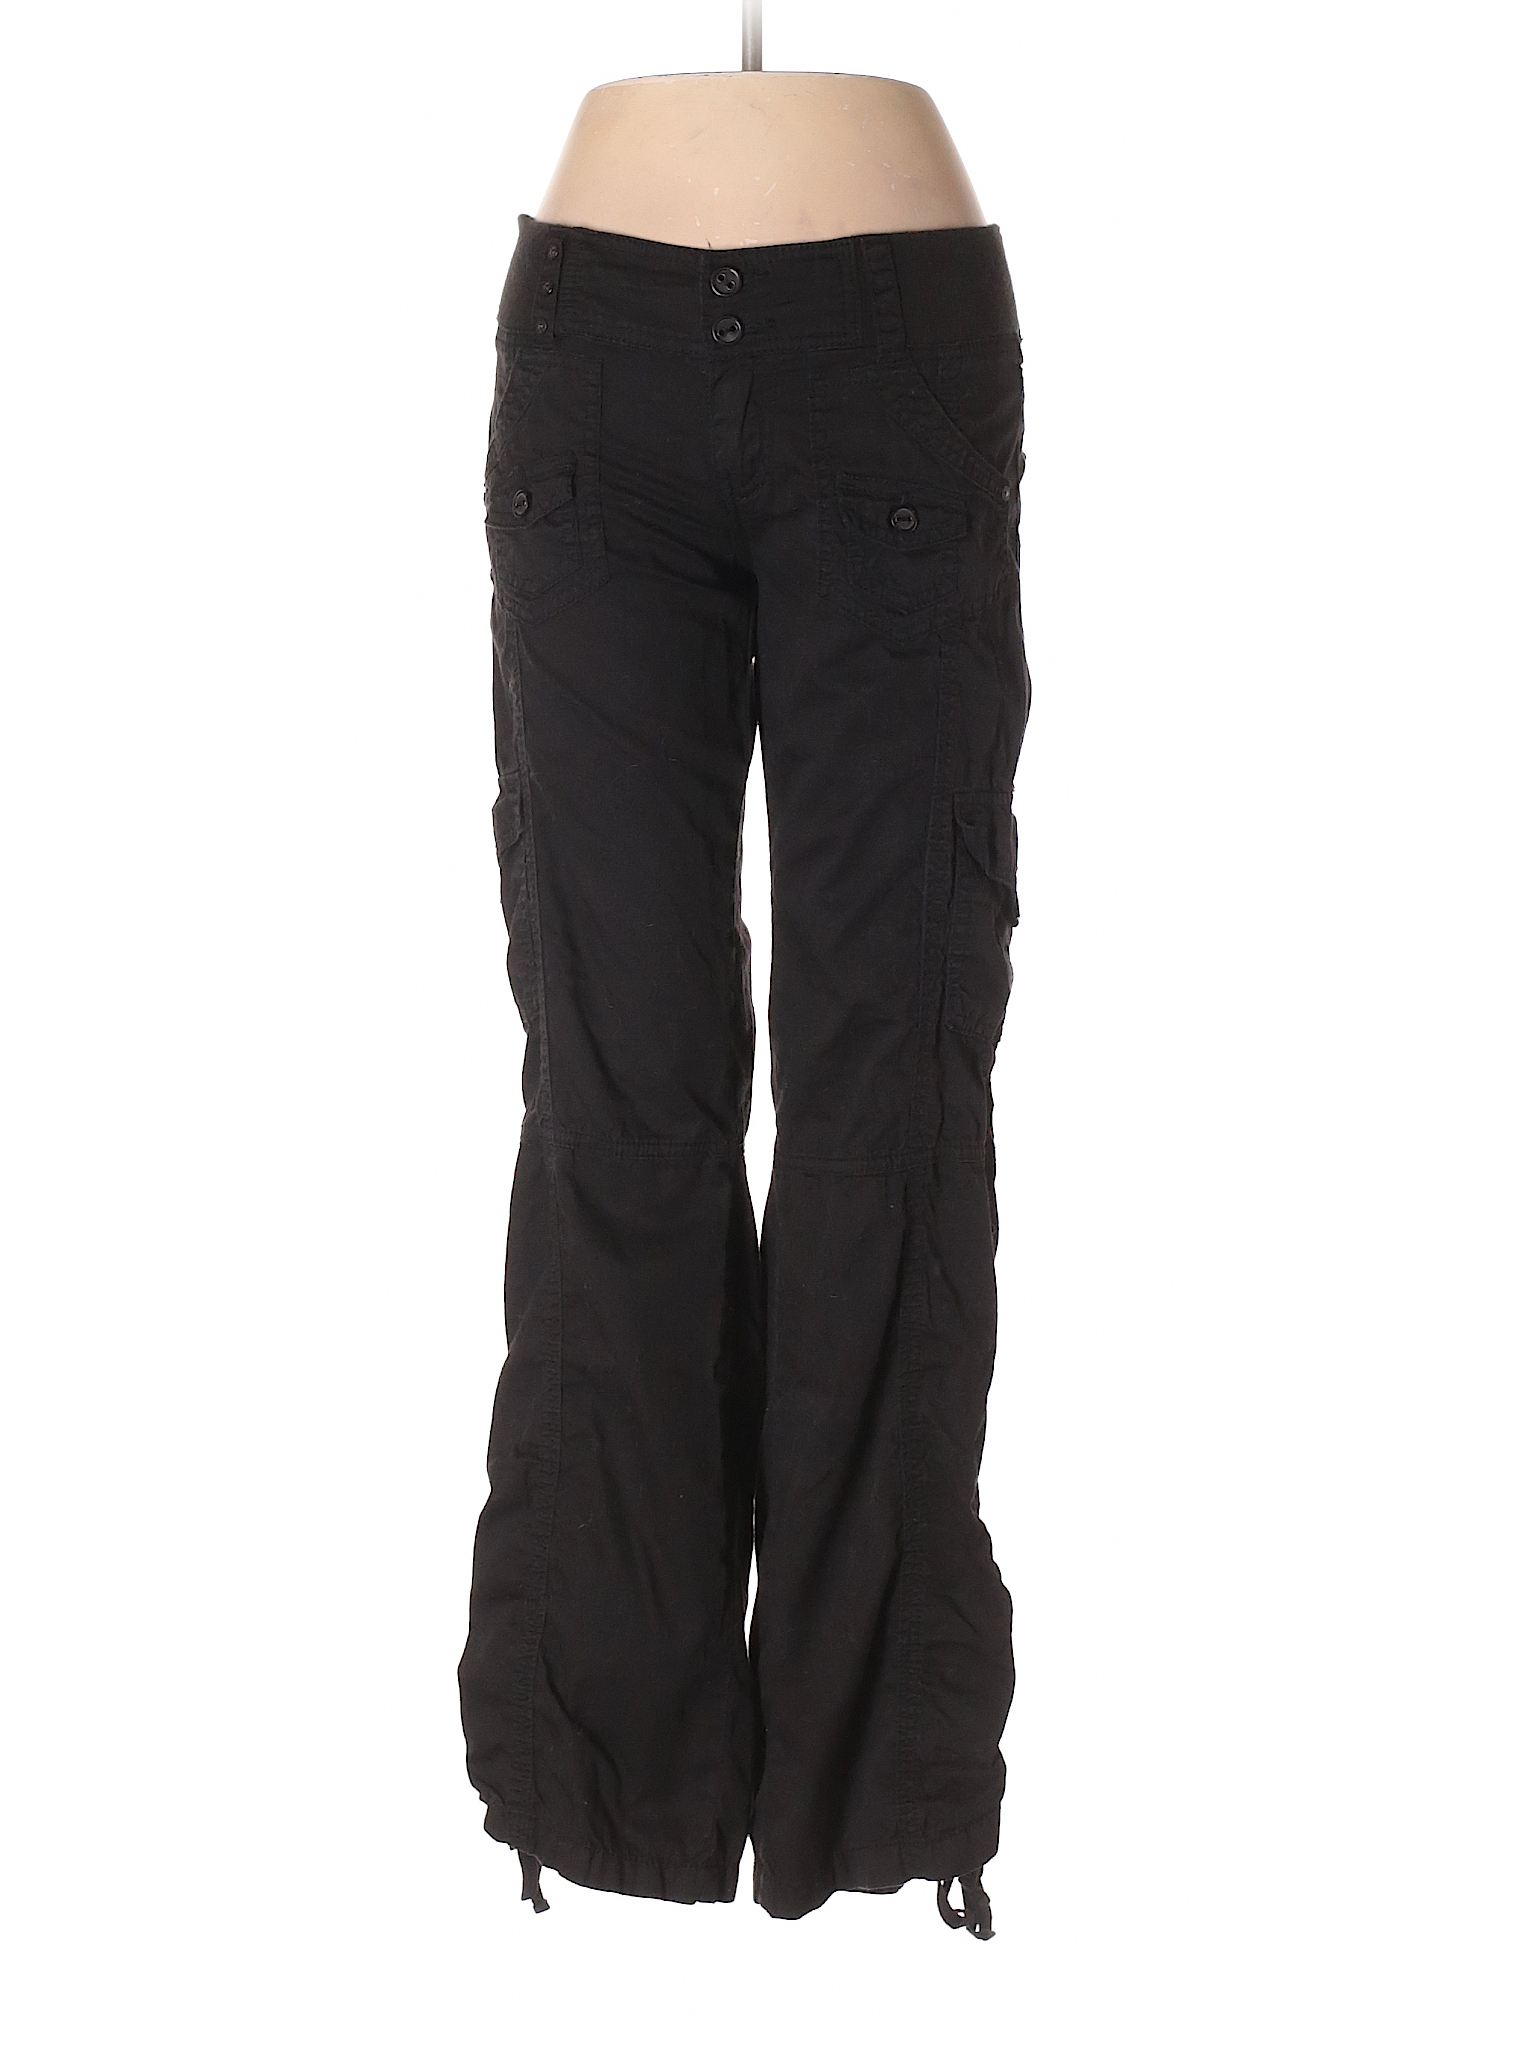 Unionbay Black Cargo Pants Sale Online - www.illva.com 1693169526